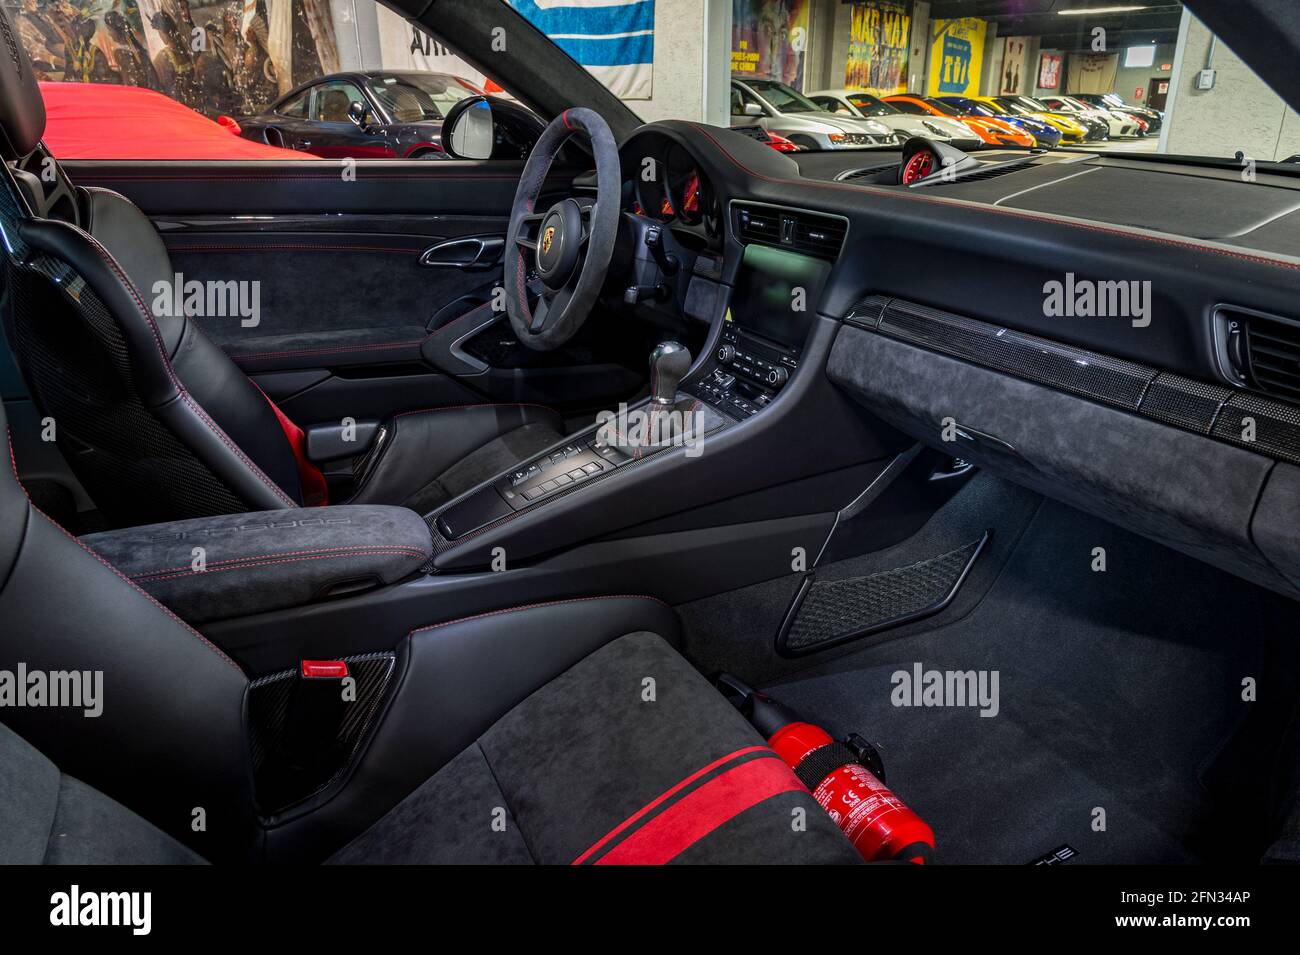 Porsche GT3 interior Stock Photo - Alamy